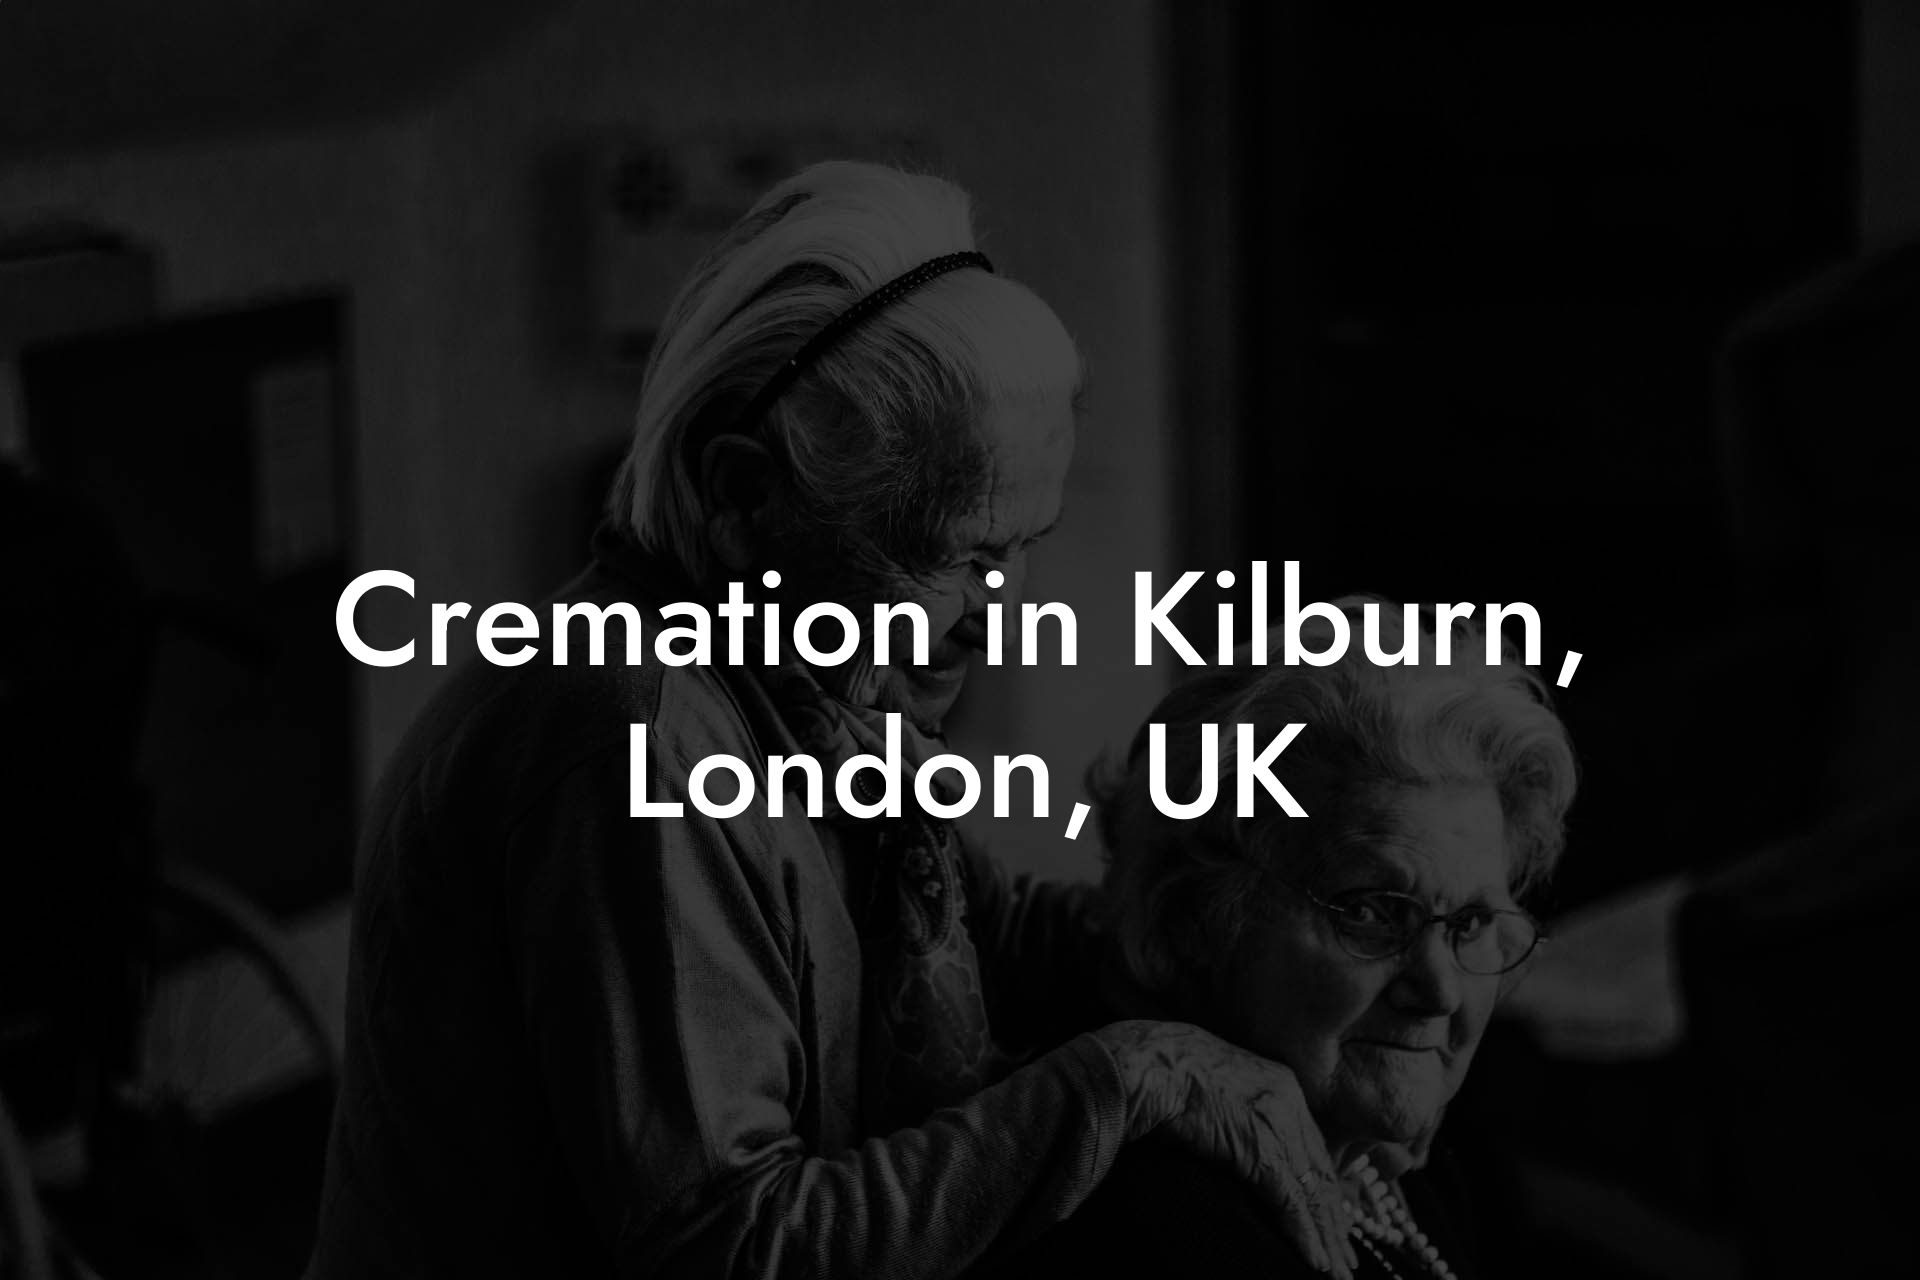 Cremation in Kilburn, London, UK